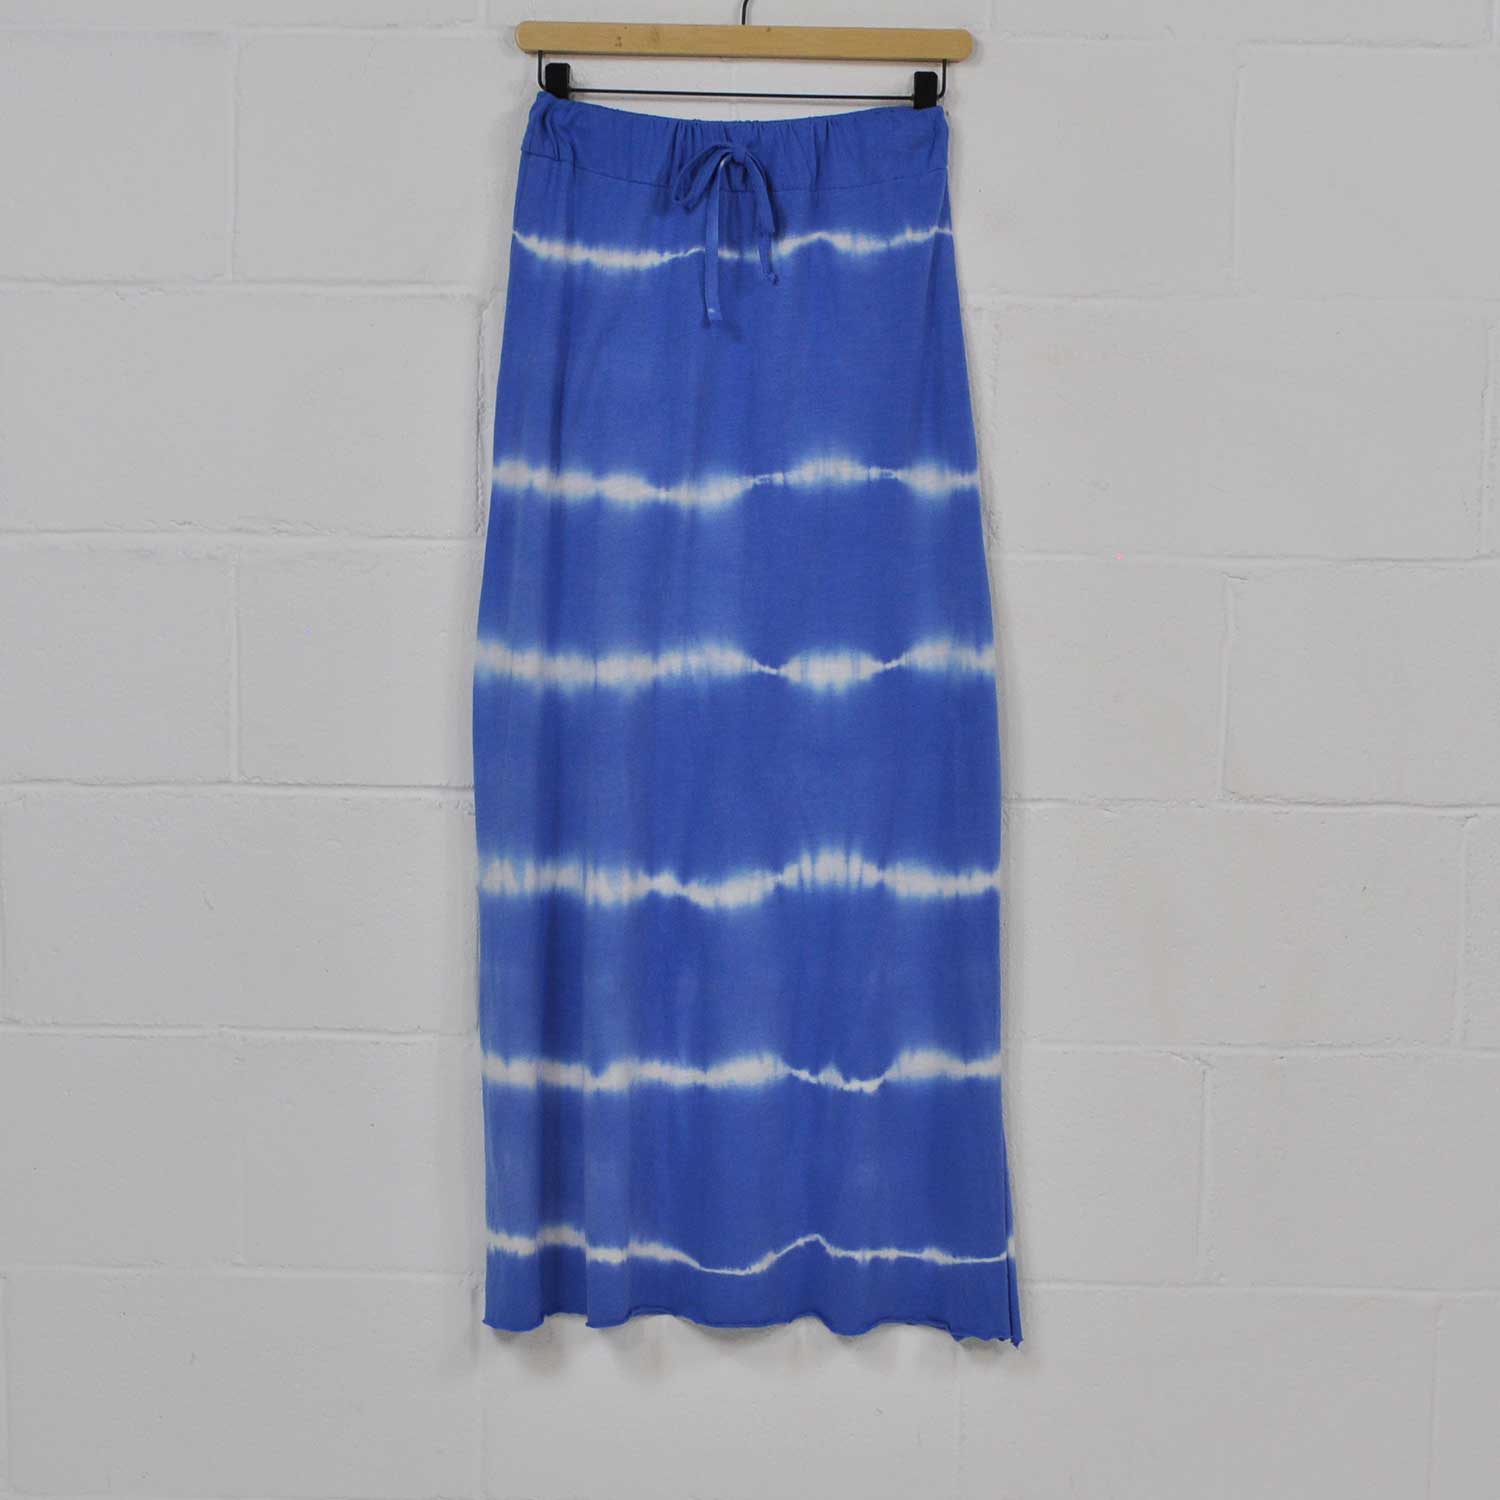 Blue tie dye skirt